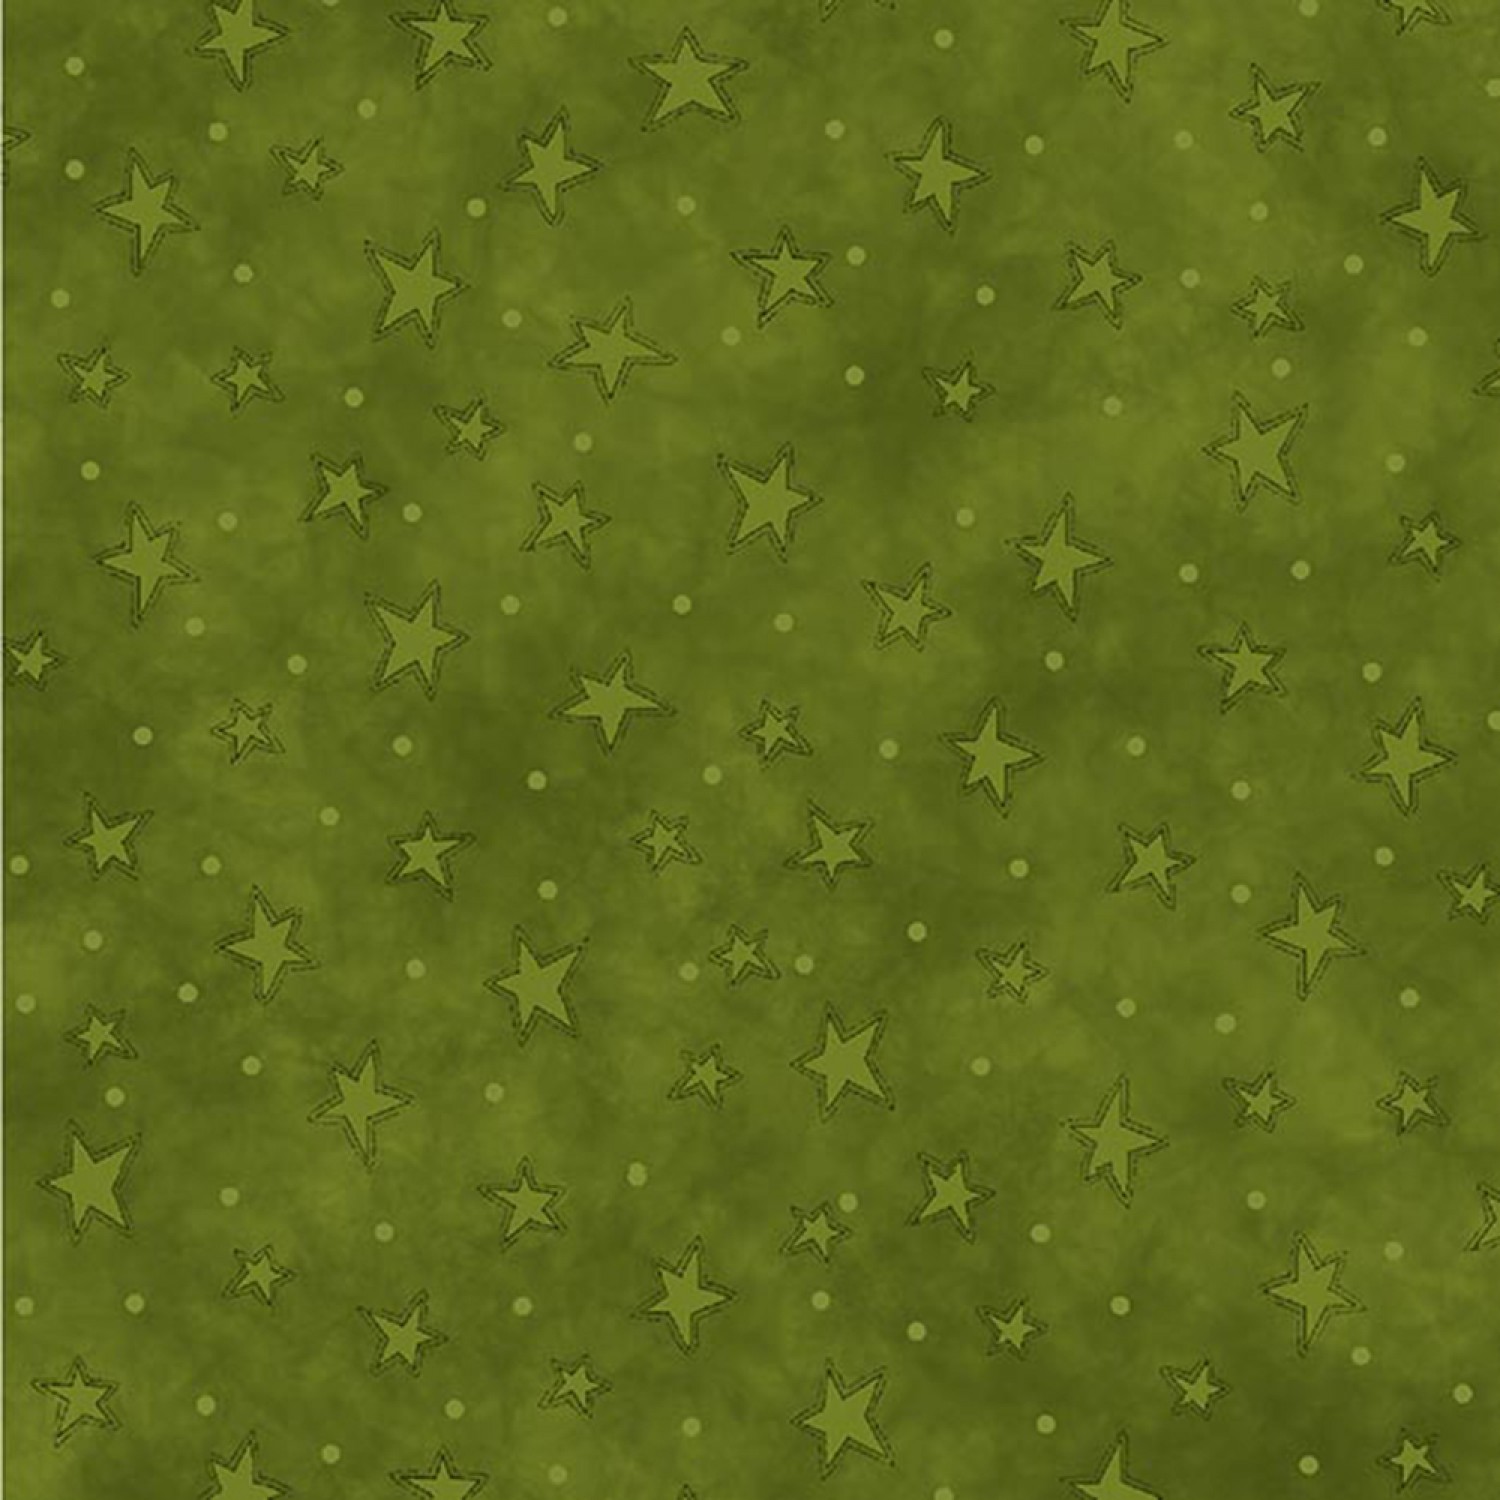 Green Starry Fabric